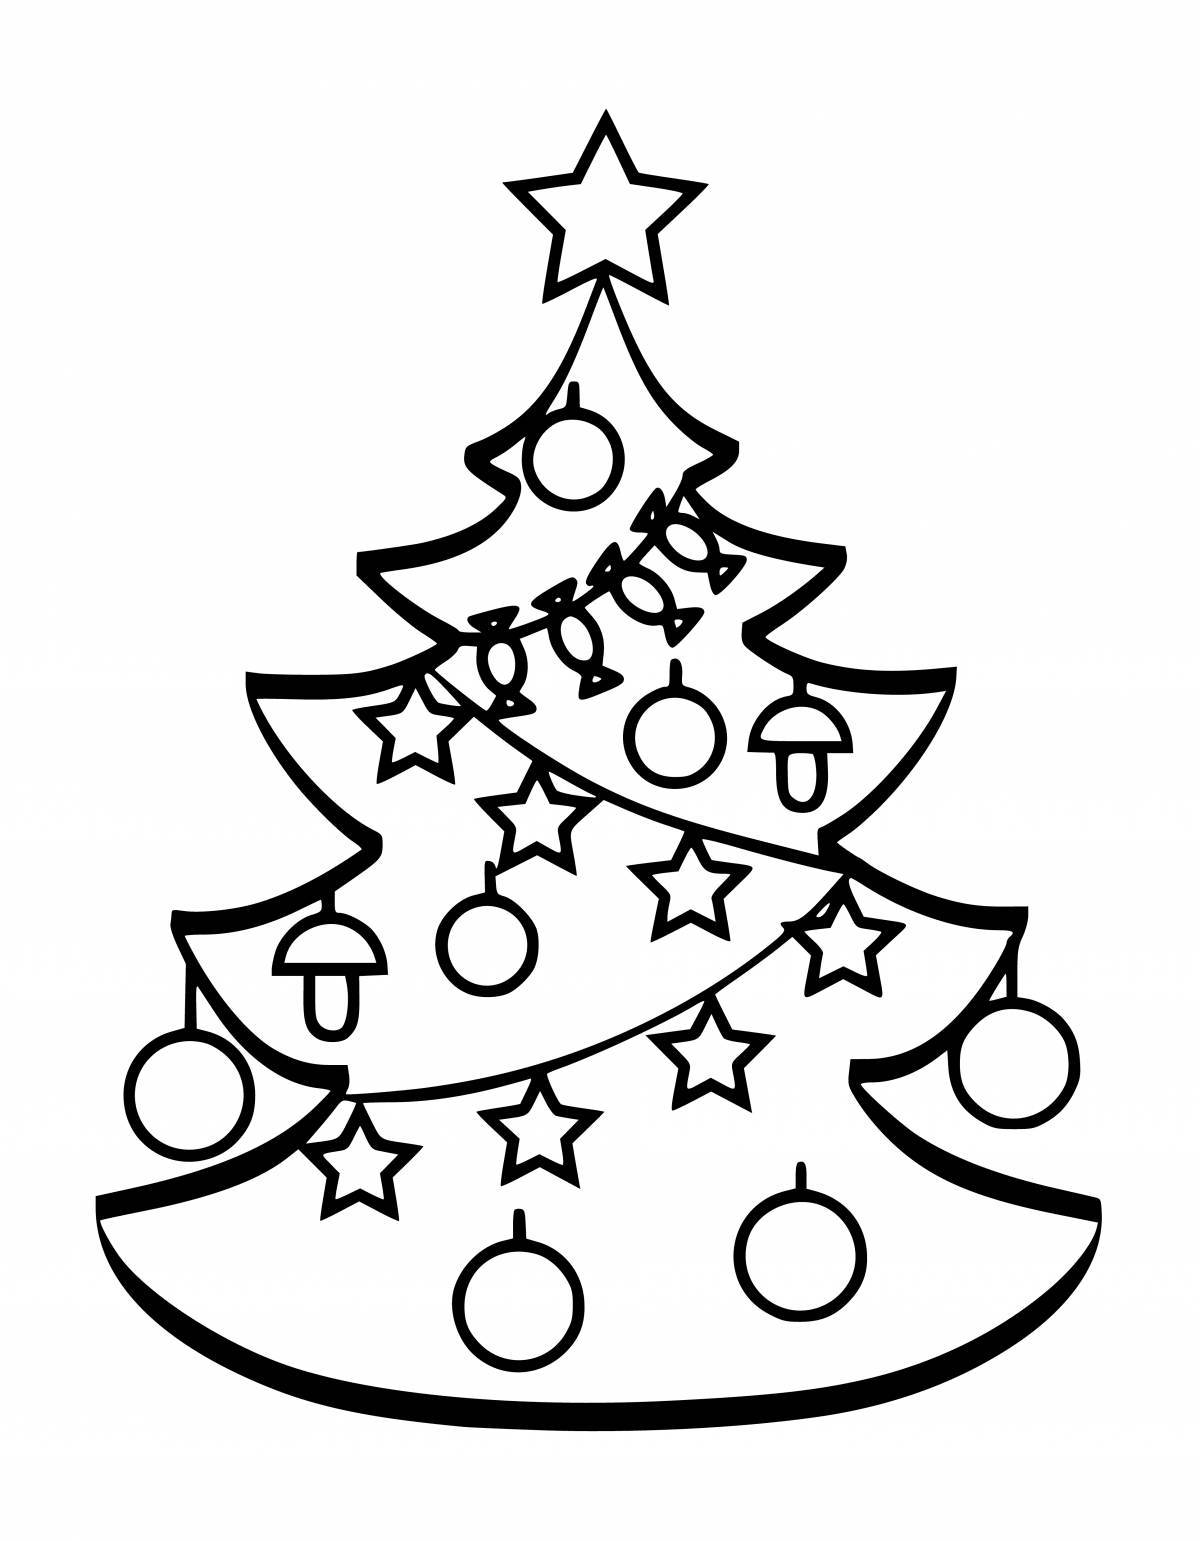 Fabulous Christmas tree coloring page